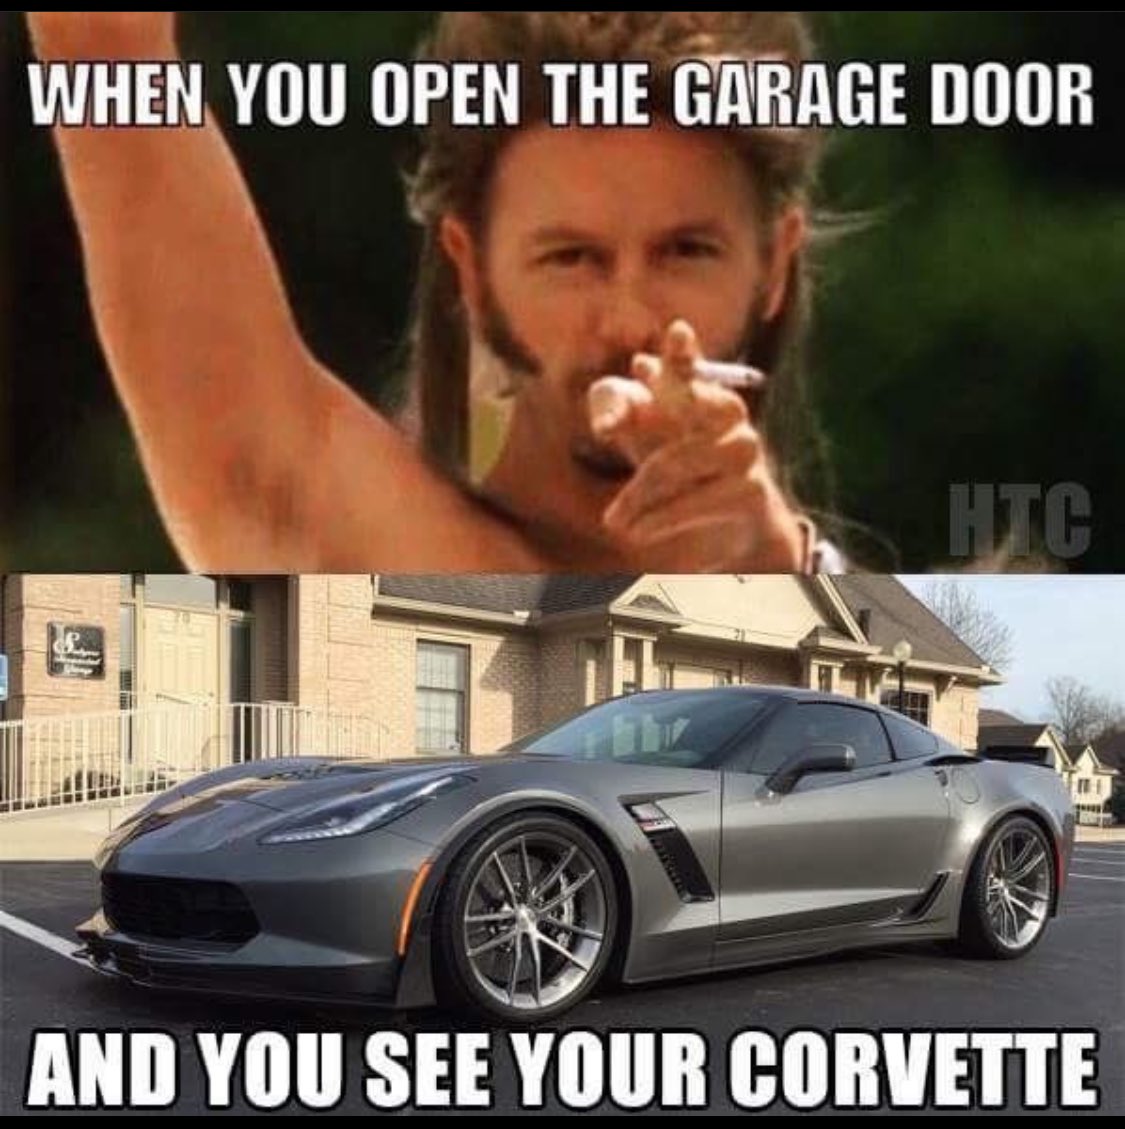 Hope you all are having a great weekend! 

#Memes #memesfunny #CarMemes #funny #corvette #corvettemike #comedy